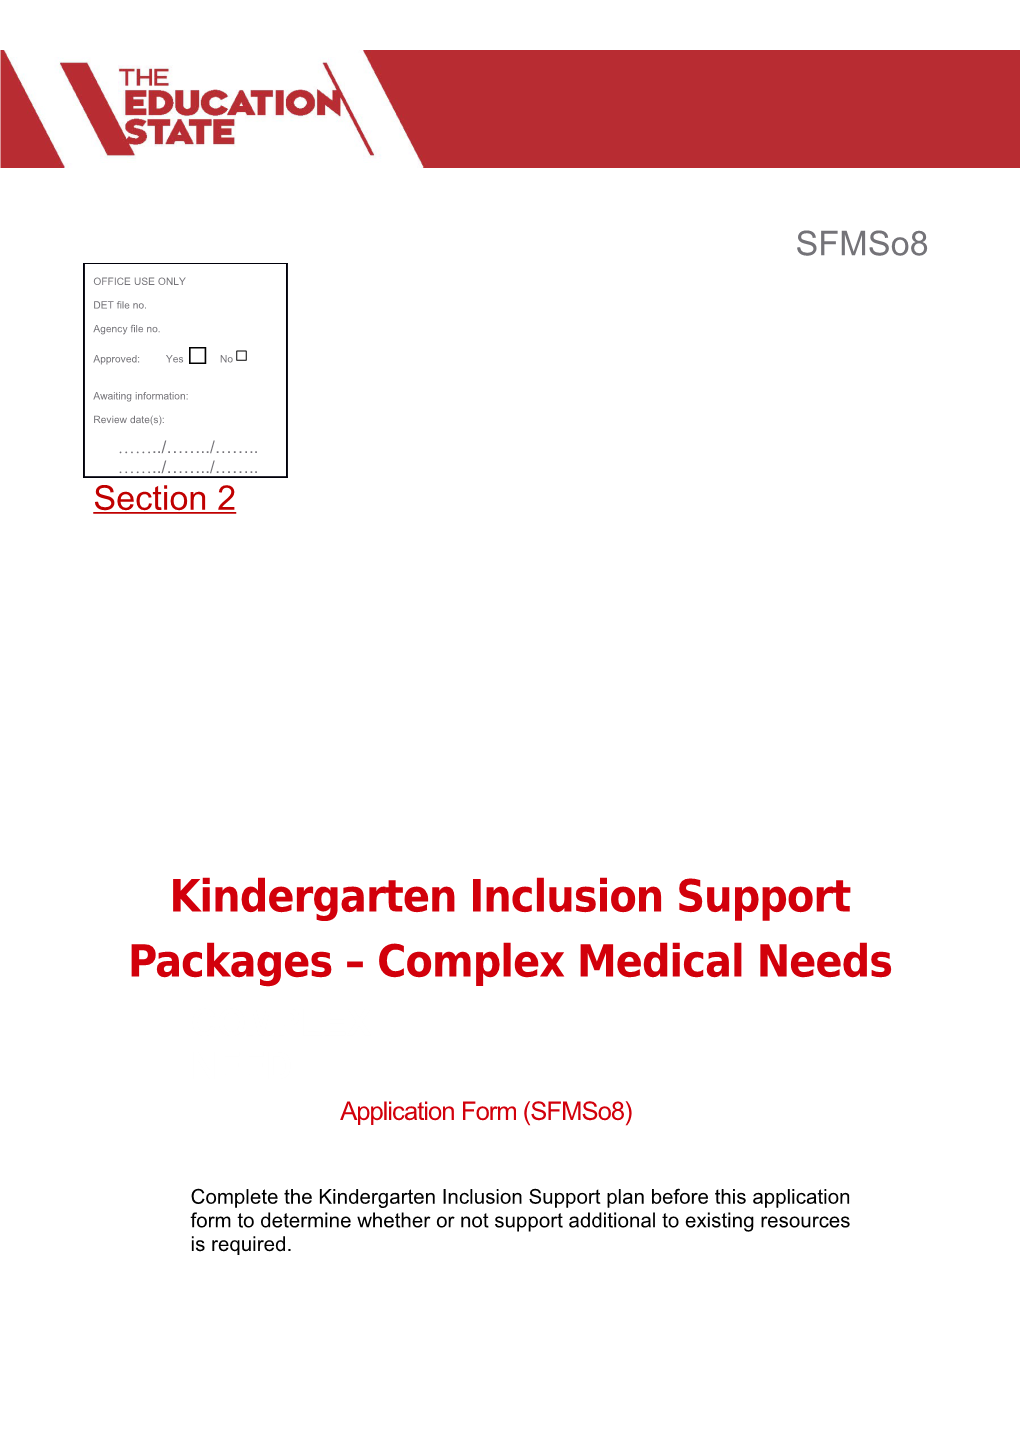 Kindergarten Inclusion Support PACKAGES COMPLEX MEDICA NEEDS